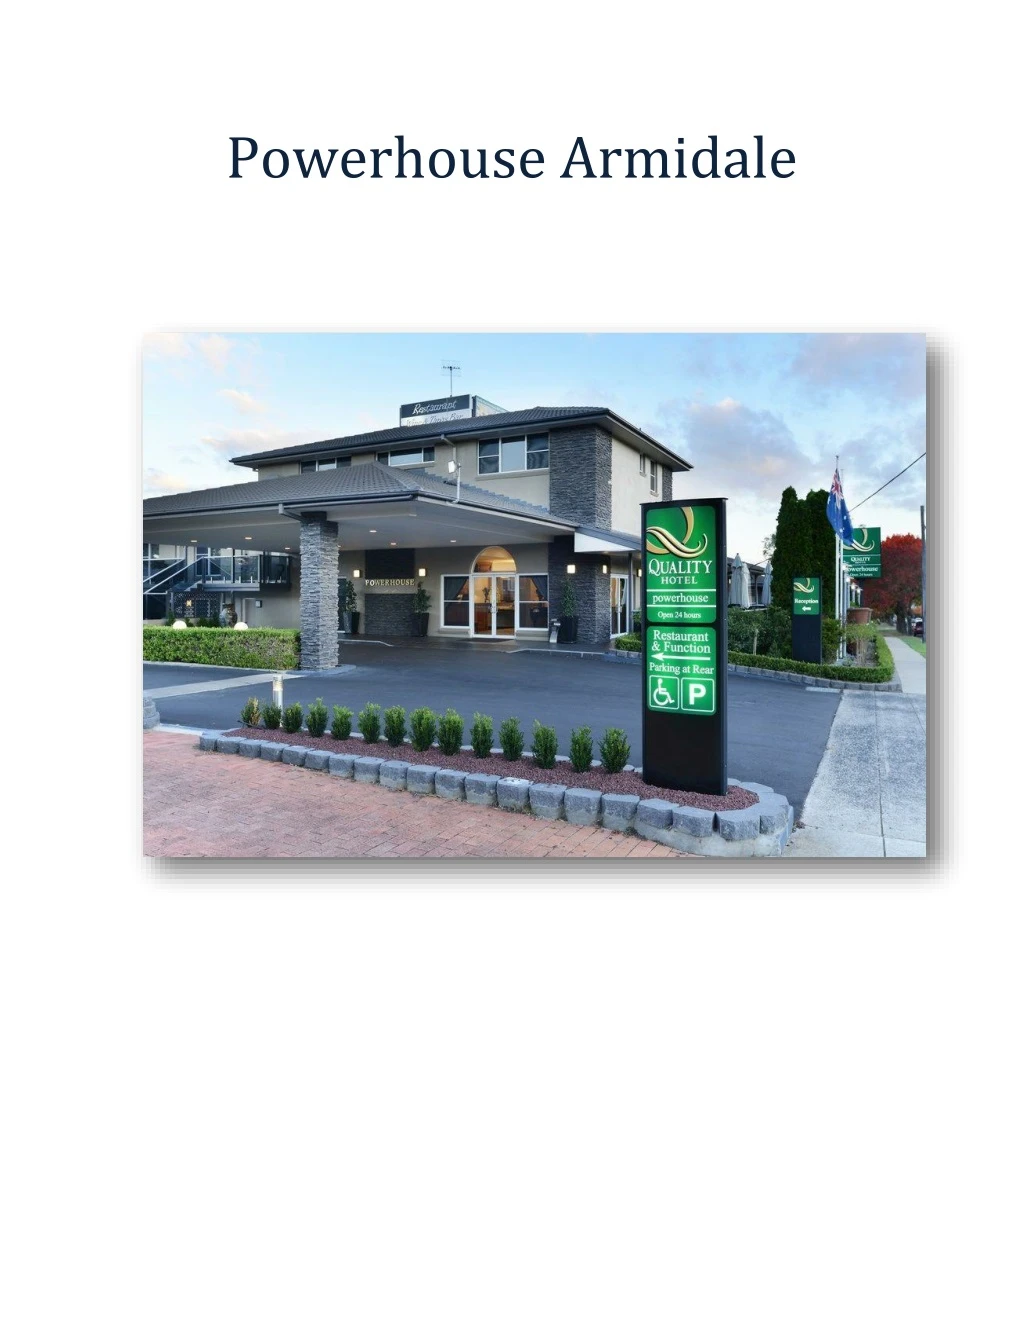 powerhouse armidale